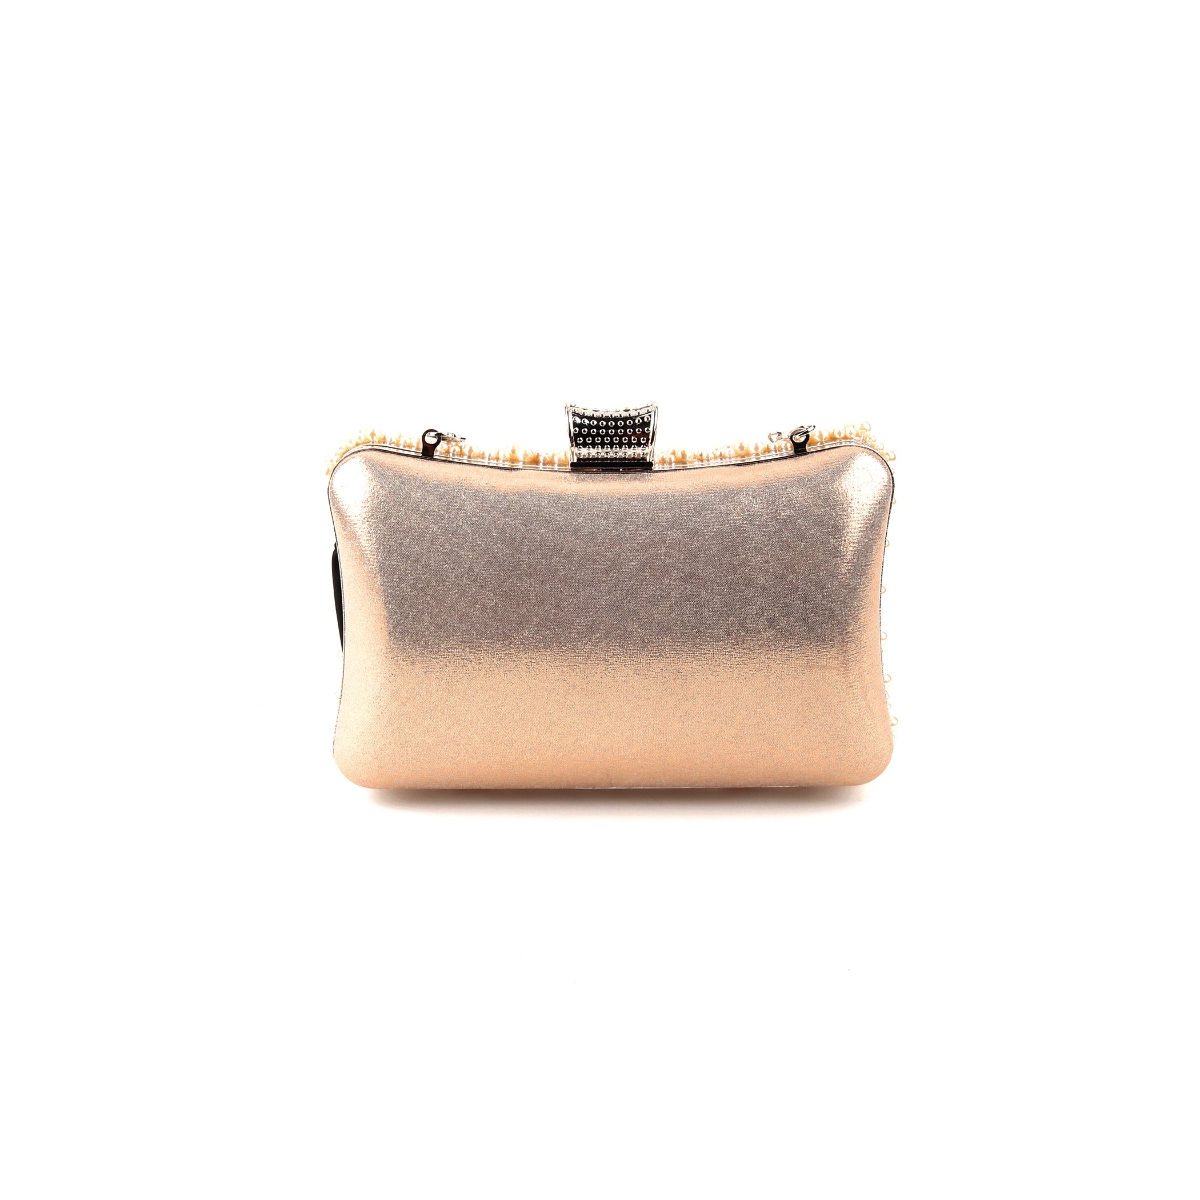 Champagne(Rose Gold) Evening Clutch Bag,Glitter Handbag,Purse With Spider |  eBay